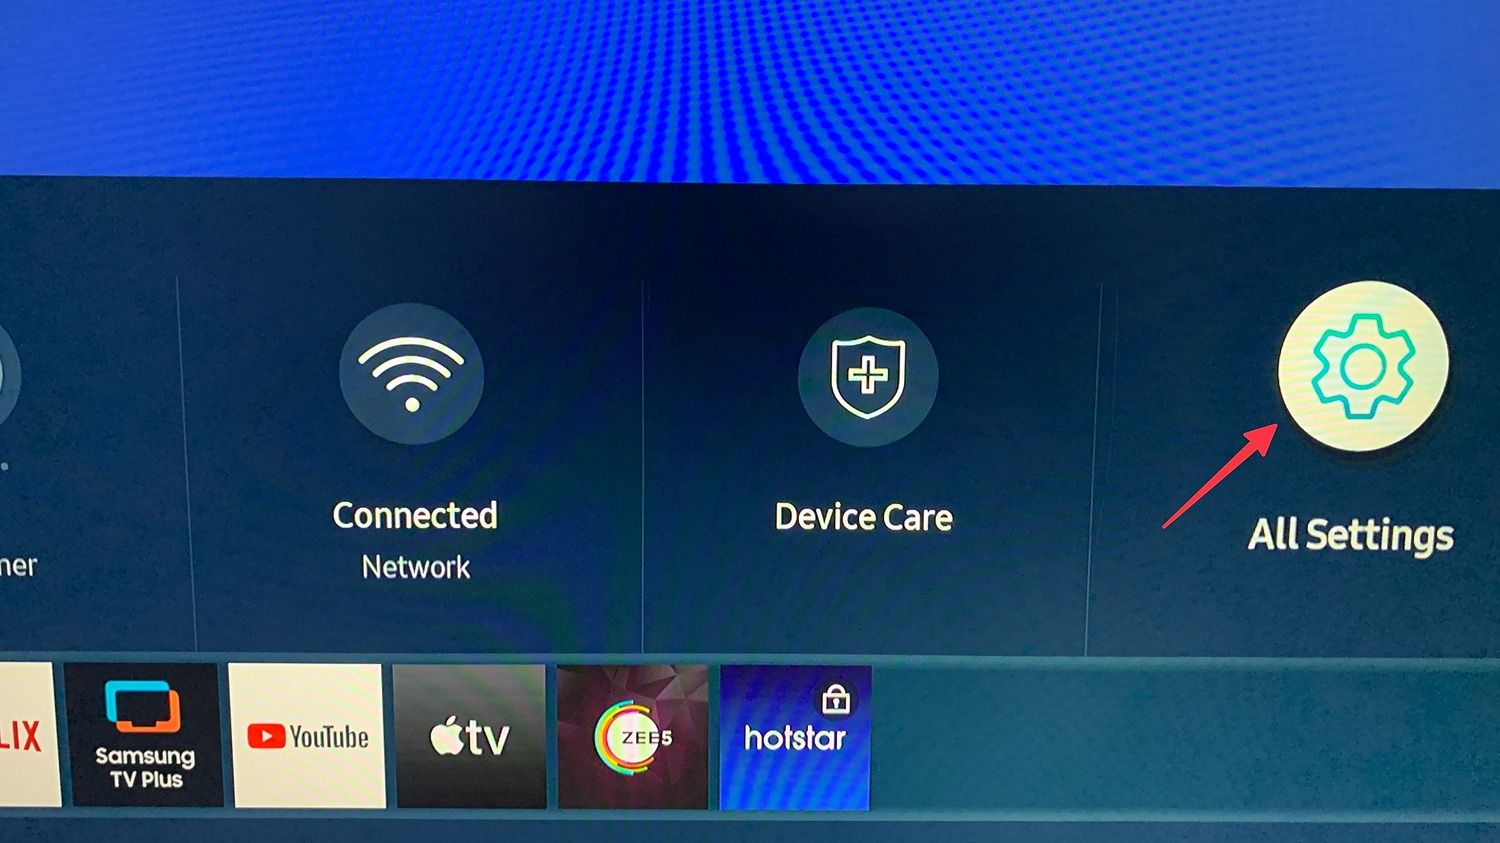 All settings on Samsung TV